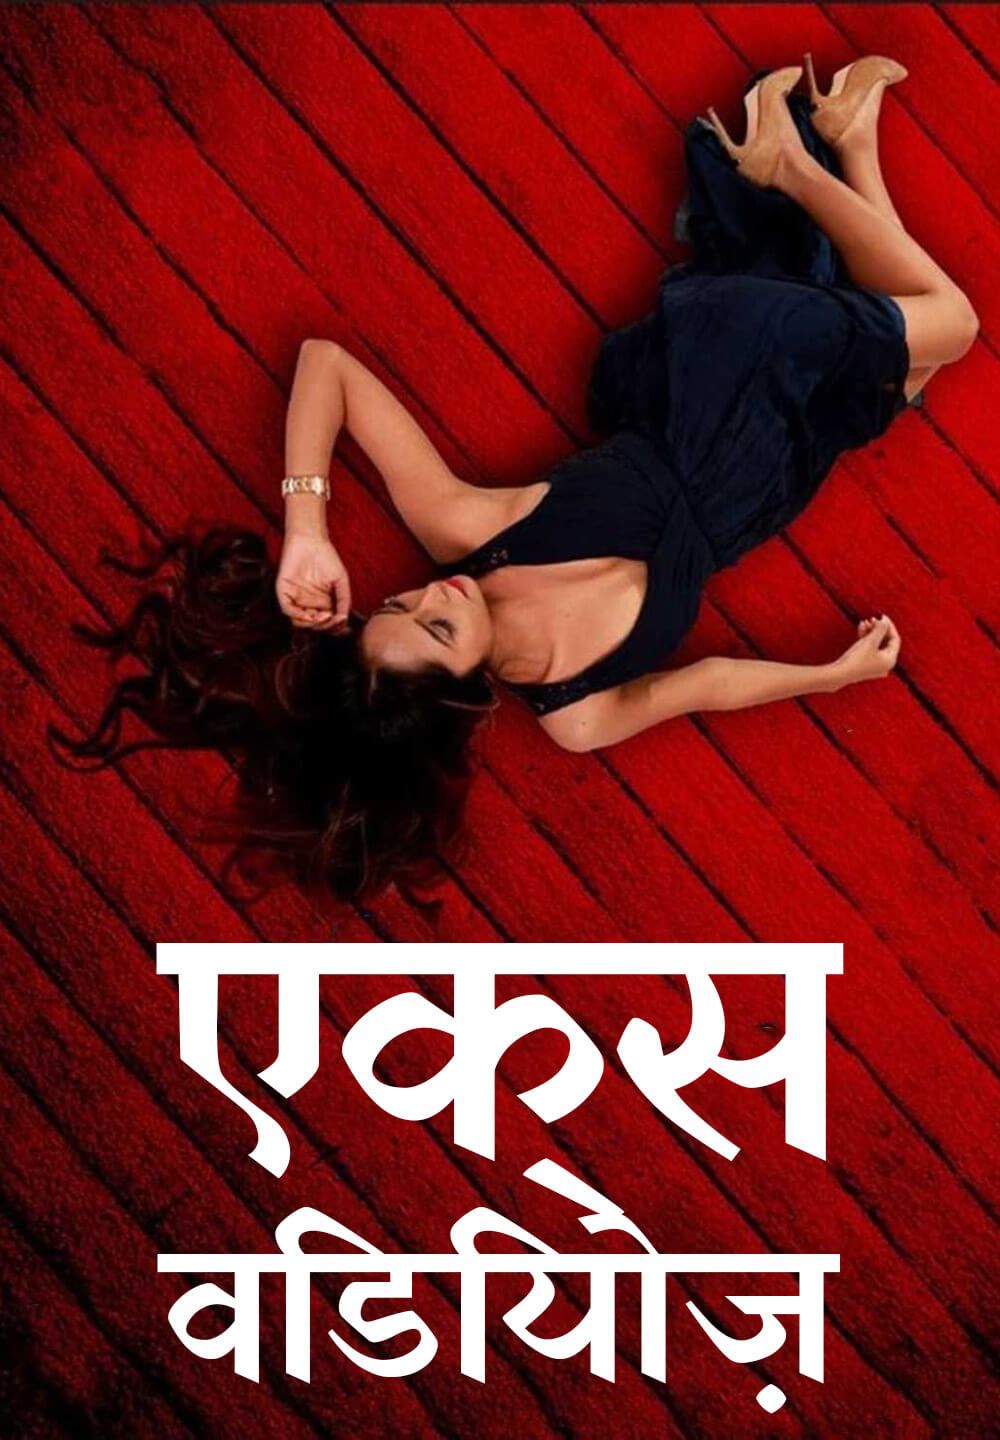 X Videos (2018) Hindi HQ Dubbed HDRip download full movie